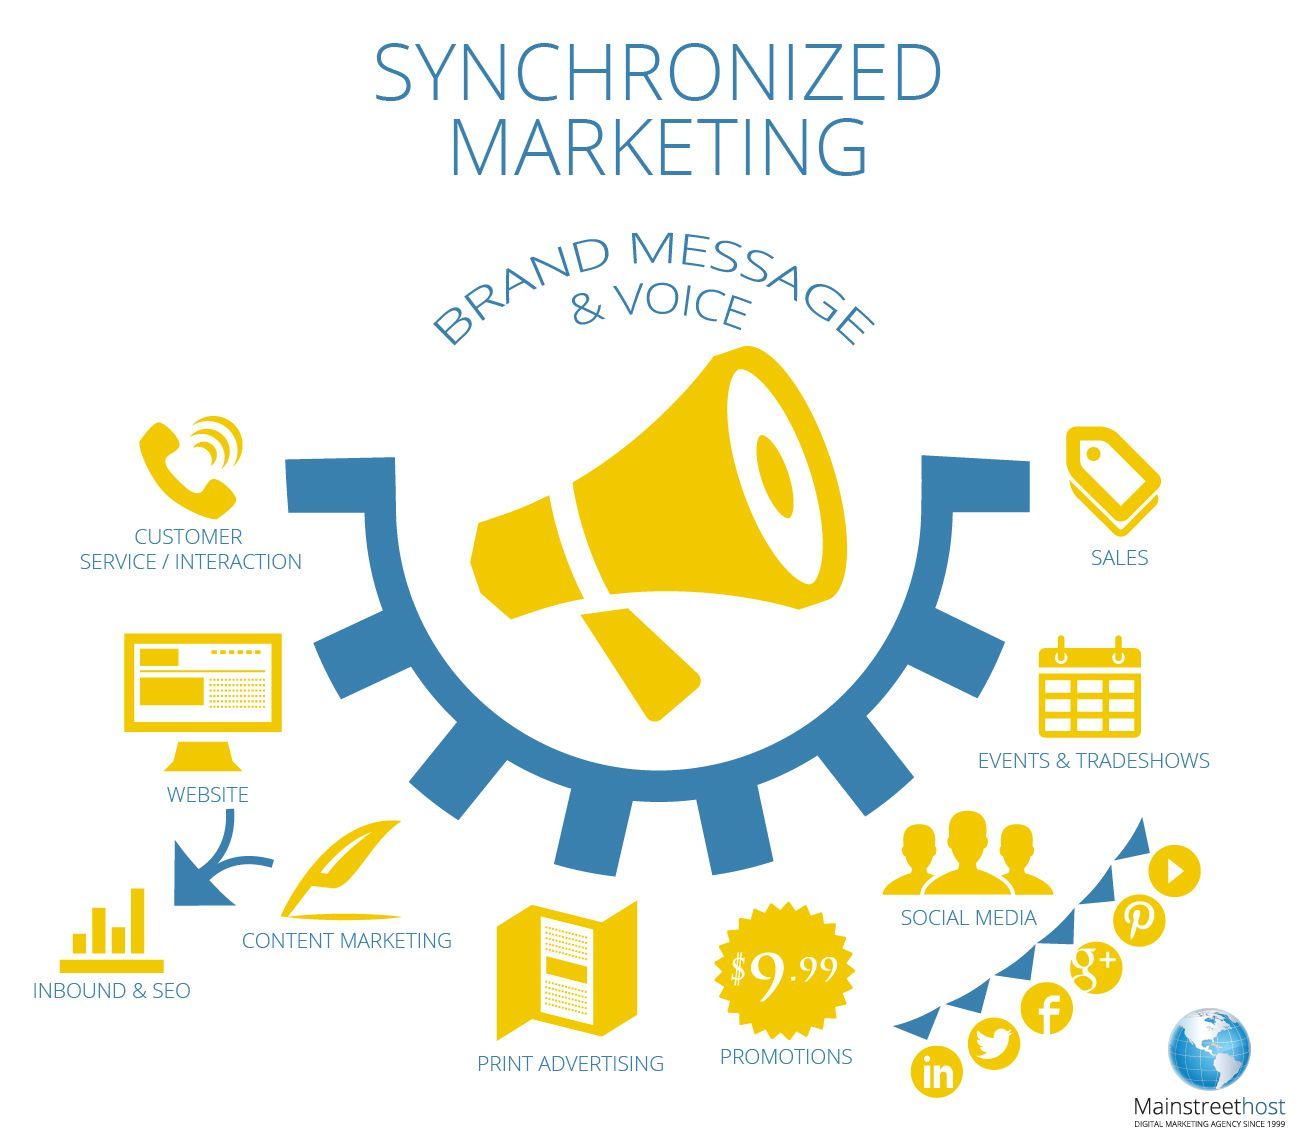 Synchronized marketing